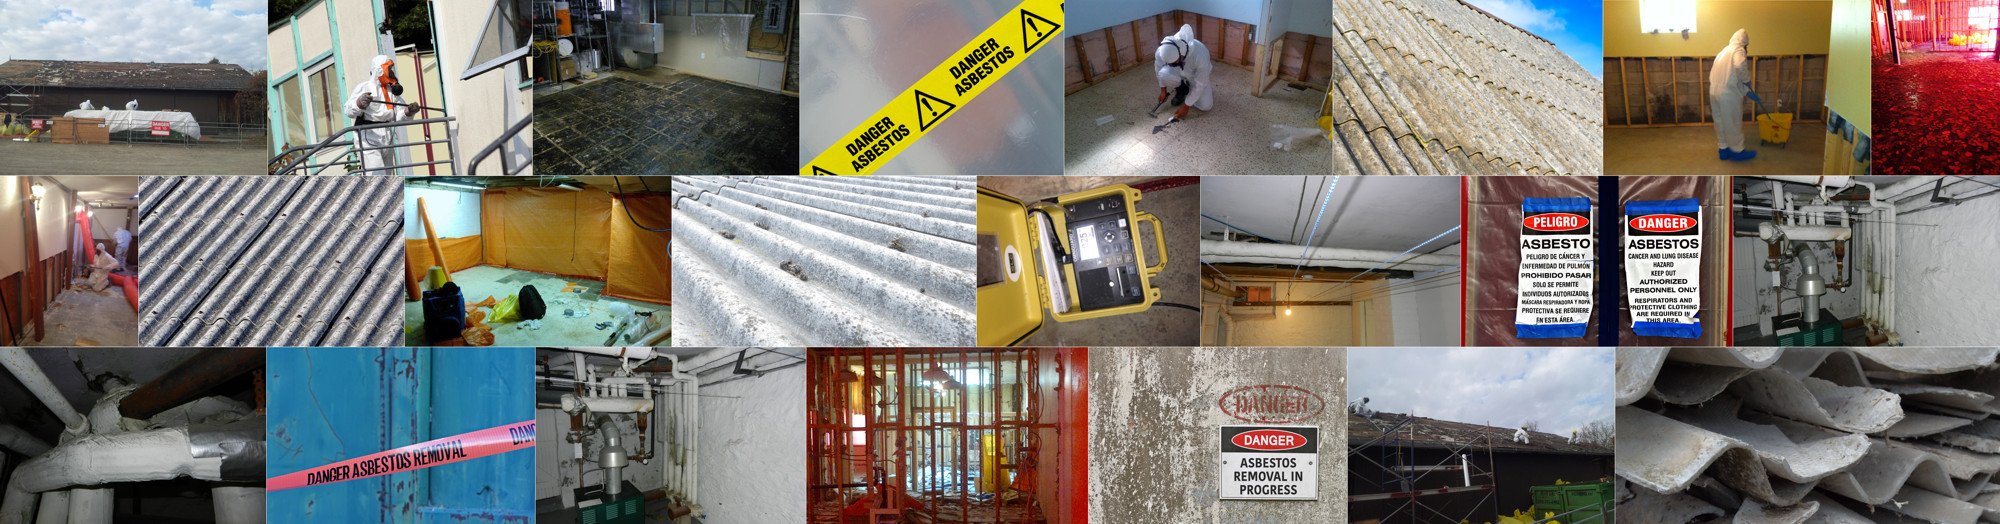 Asbestos Abatement Services Slc Environmental Ontario Asbestos Mould Abatement Specialists